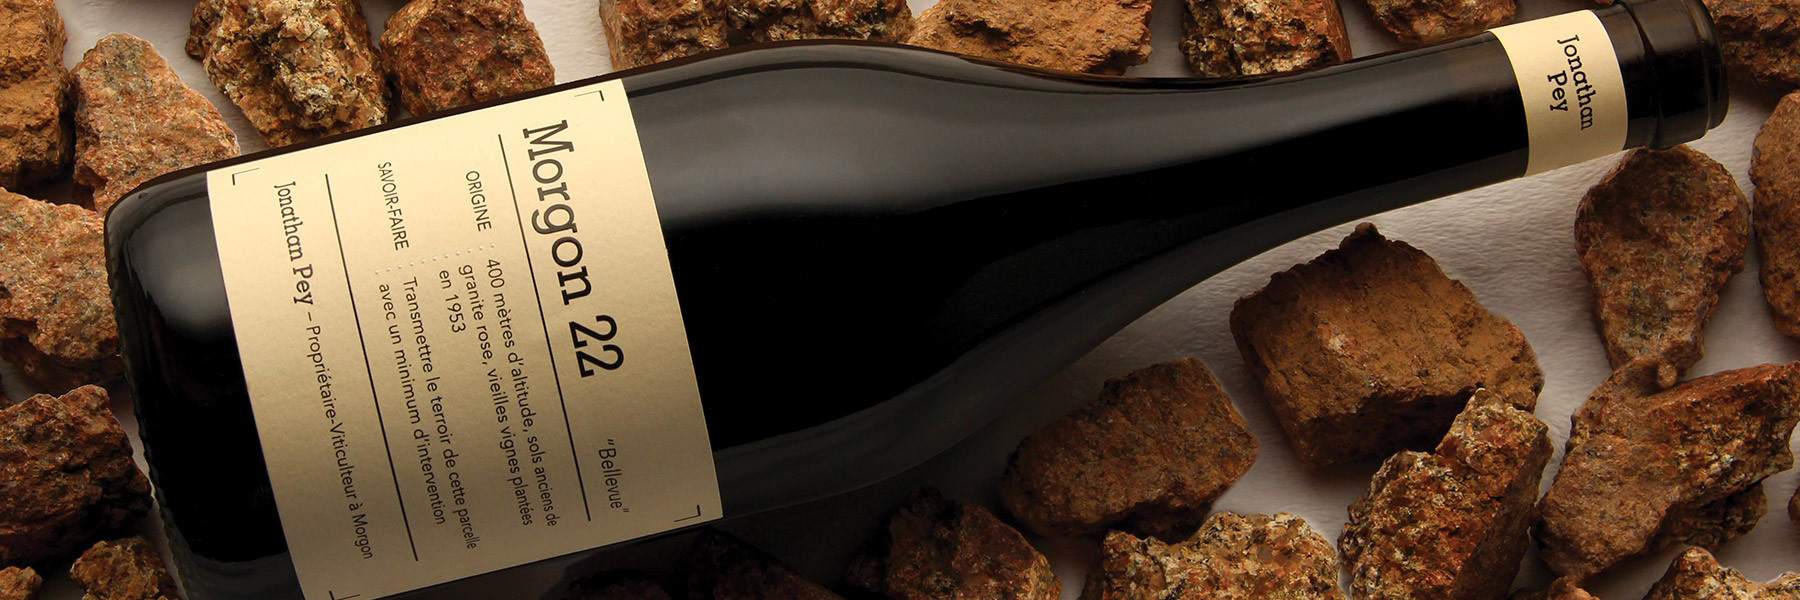 Morgon Cru wine on granite from vineyard